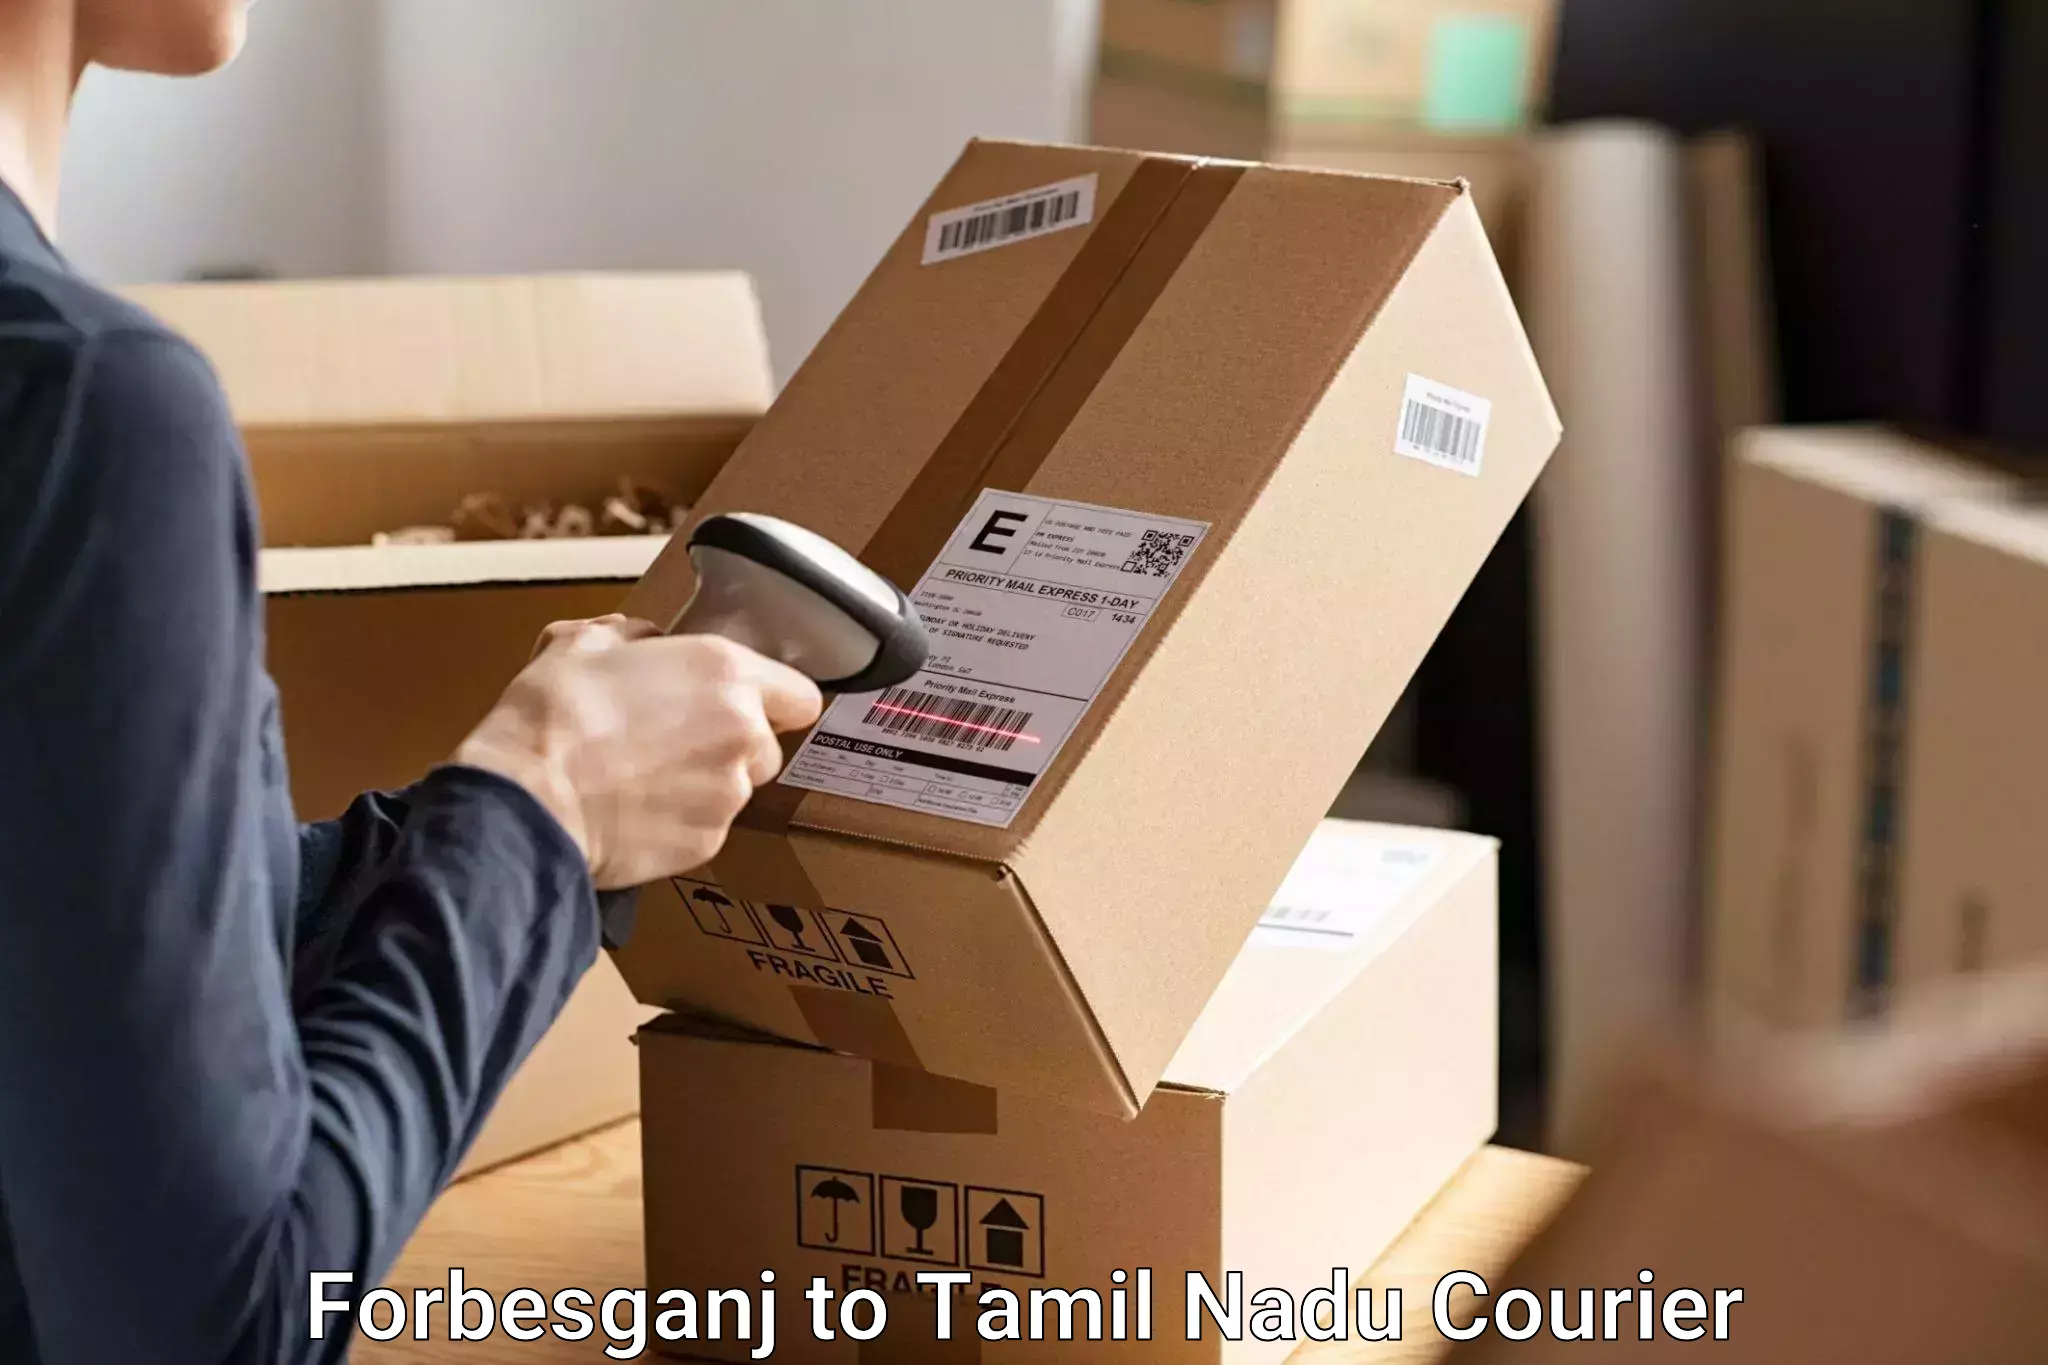 Luggage delivery network Forbesganj to Tiruvannamalai